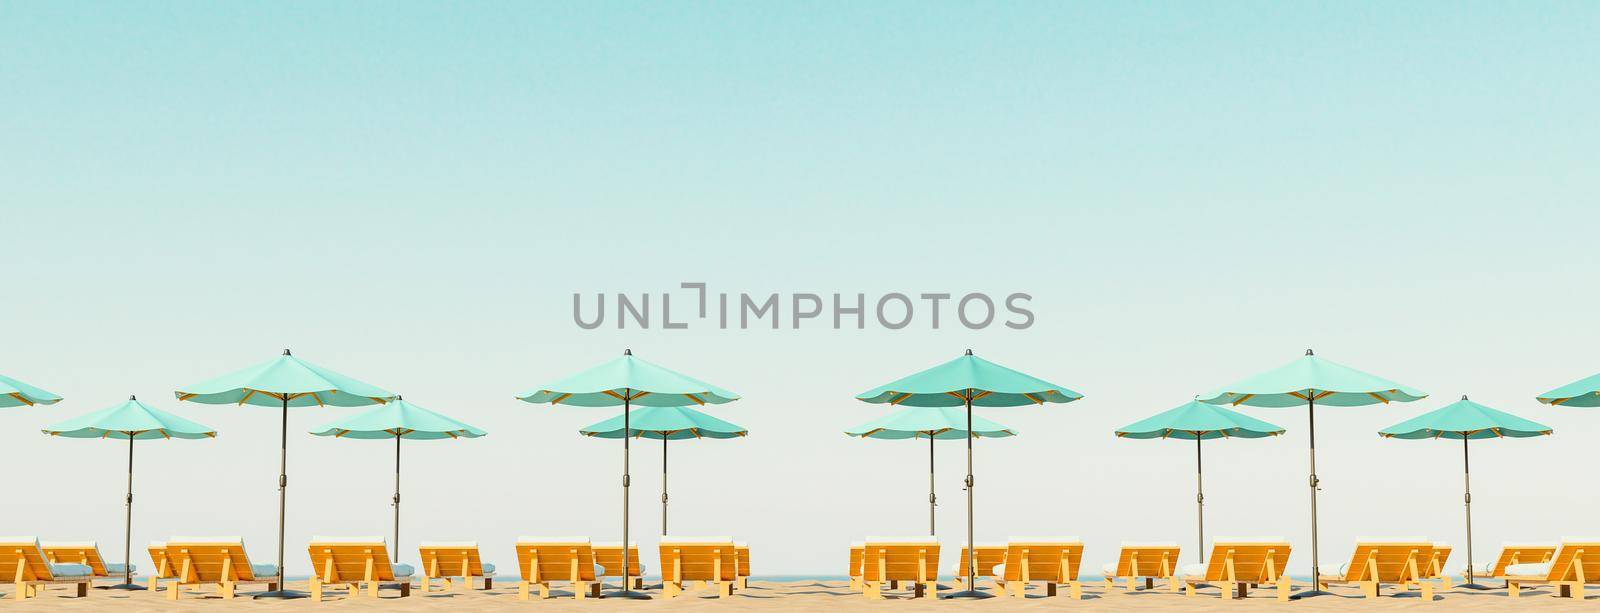 umbrellas on the beach horizon by asolano